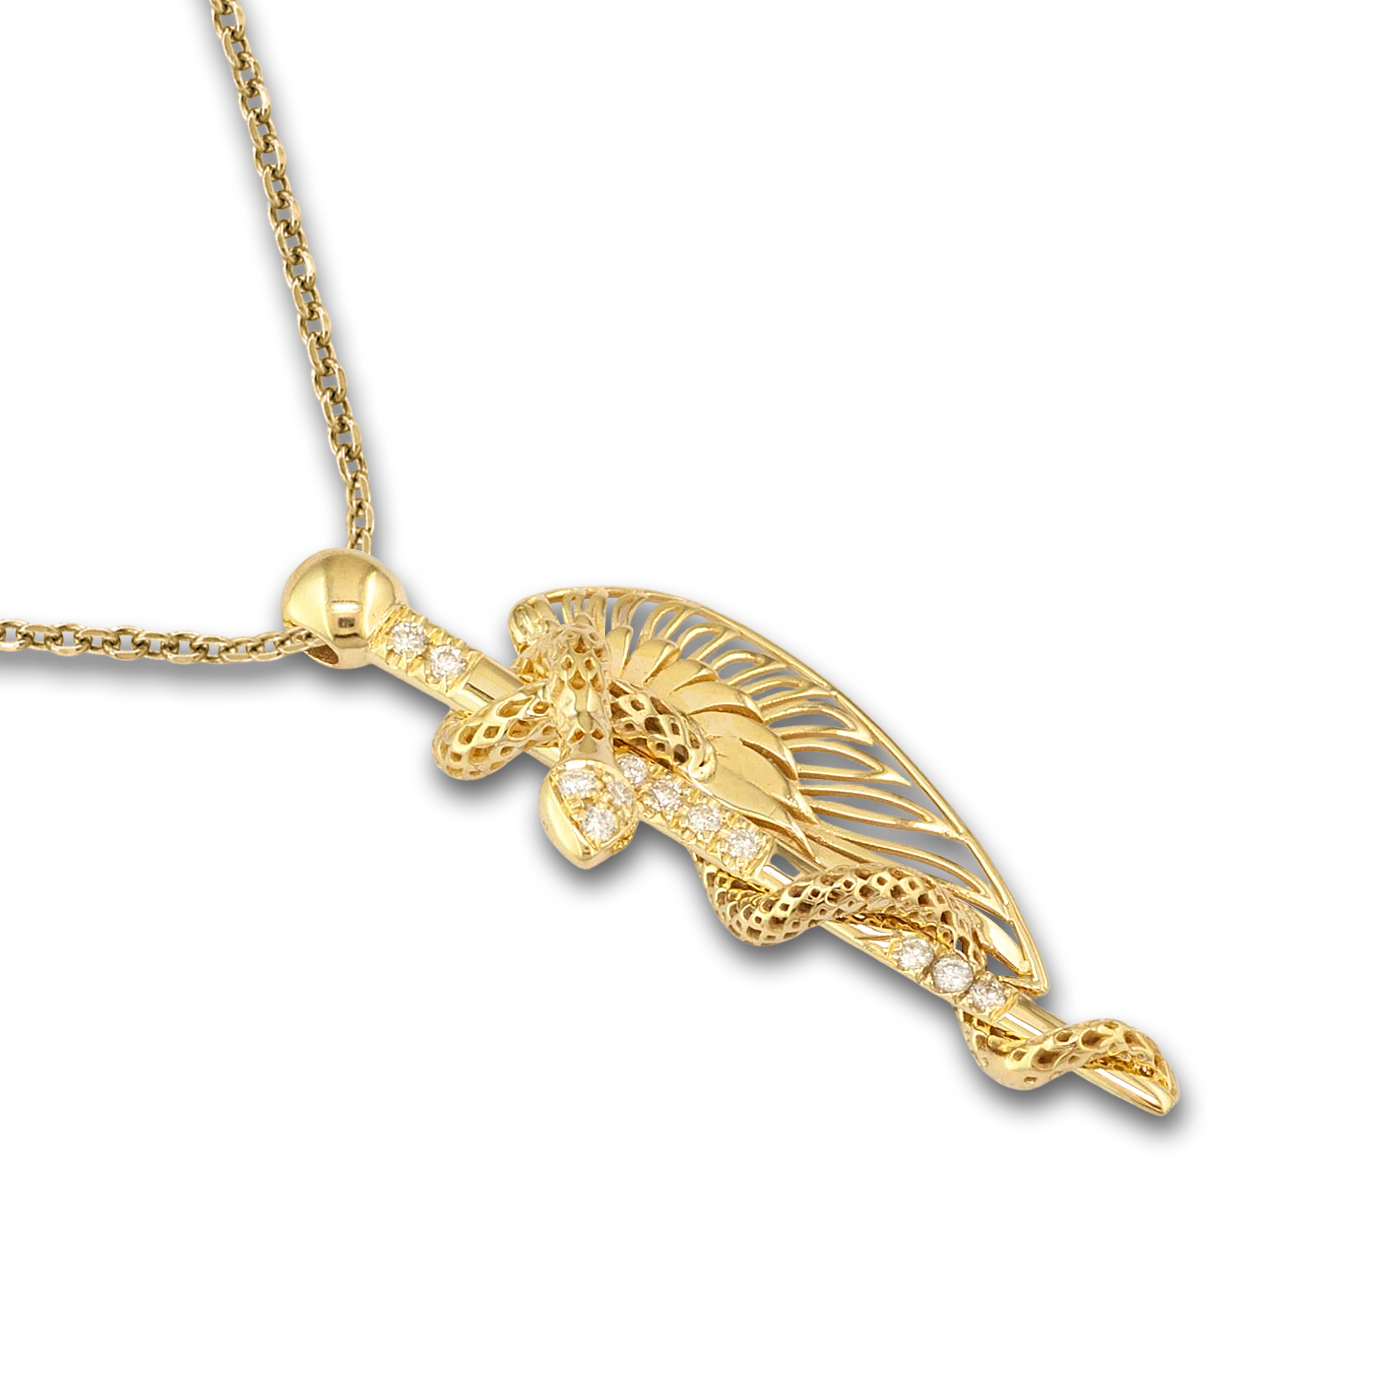 Hermes Caduceus Gold Pendant with diamonds